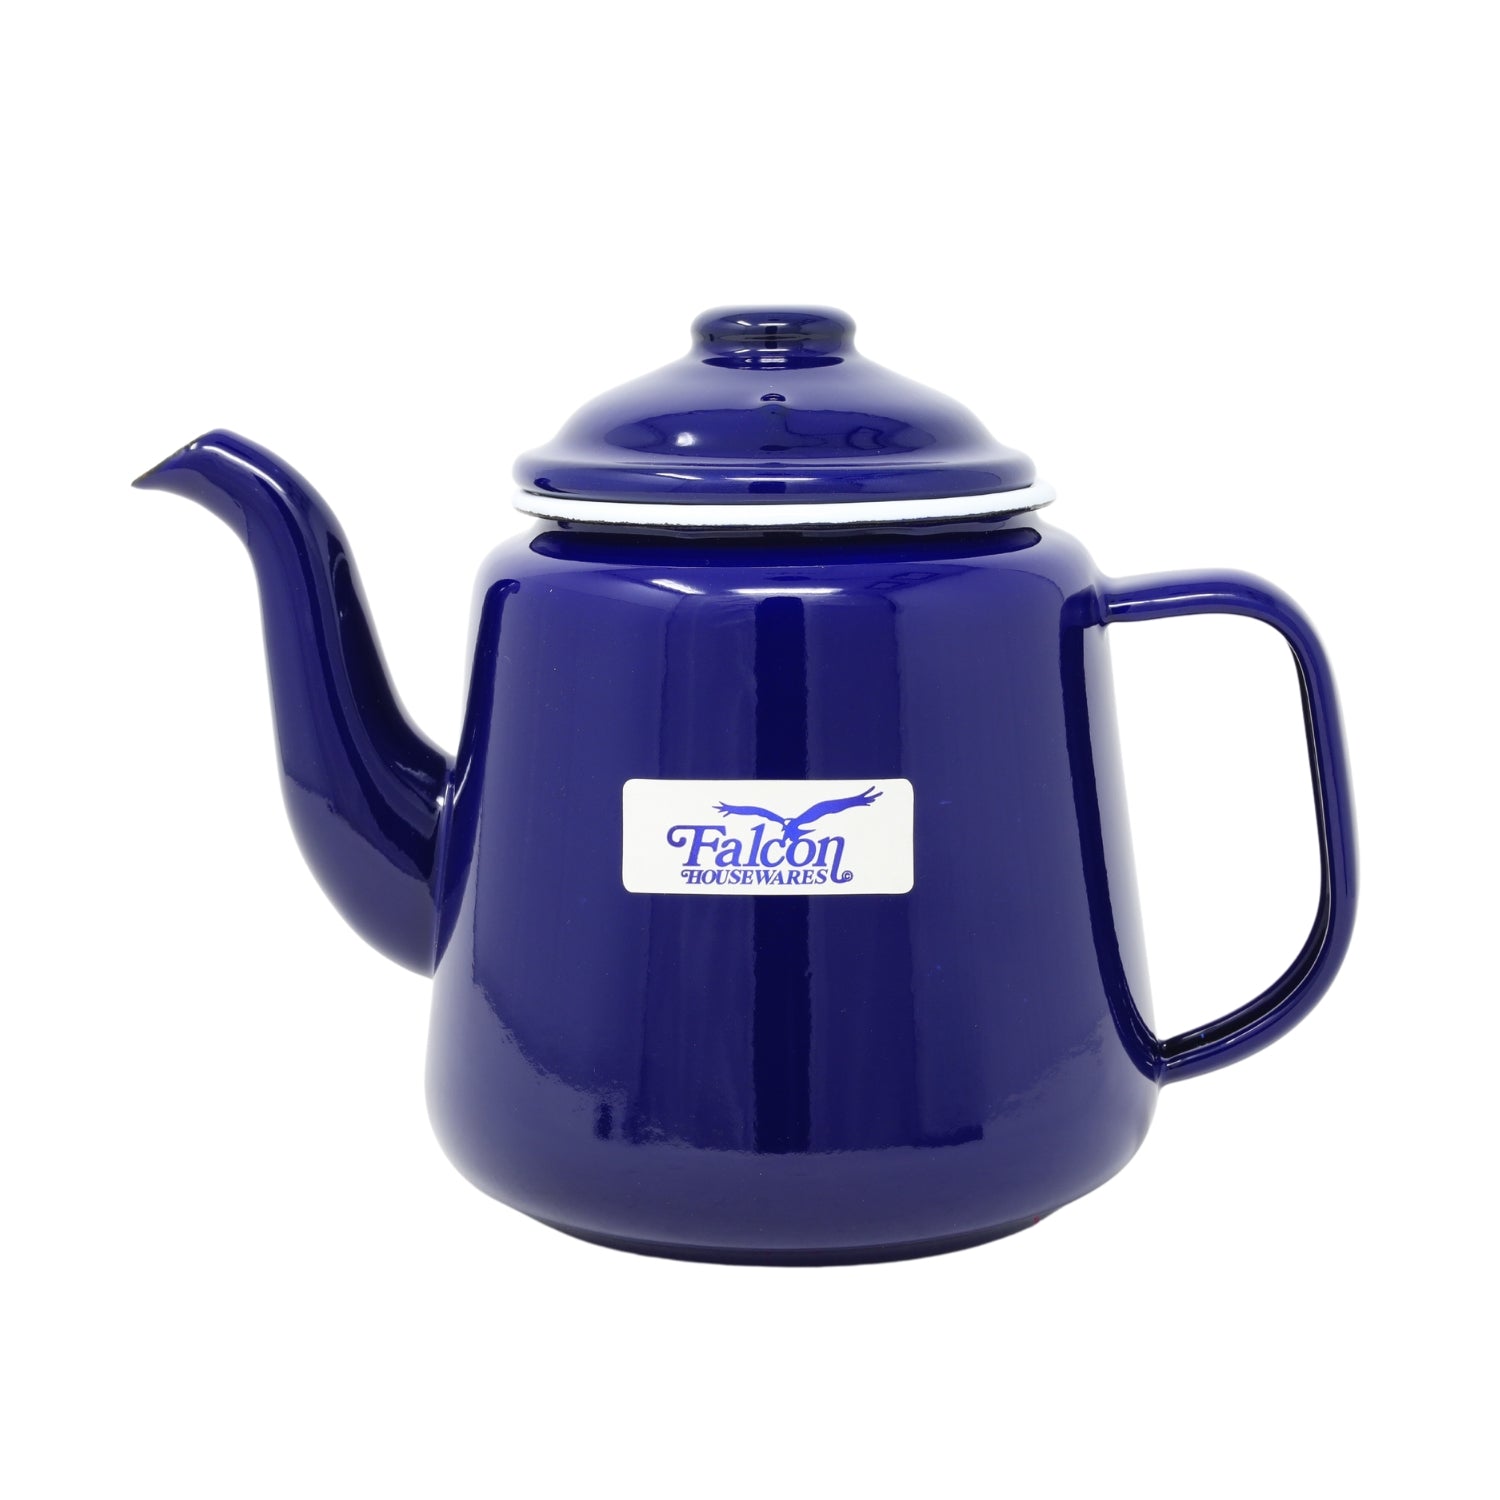 14cm Blue Enamel Teapot with White Rim